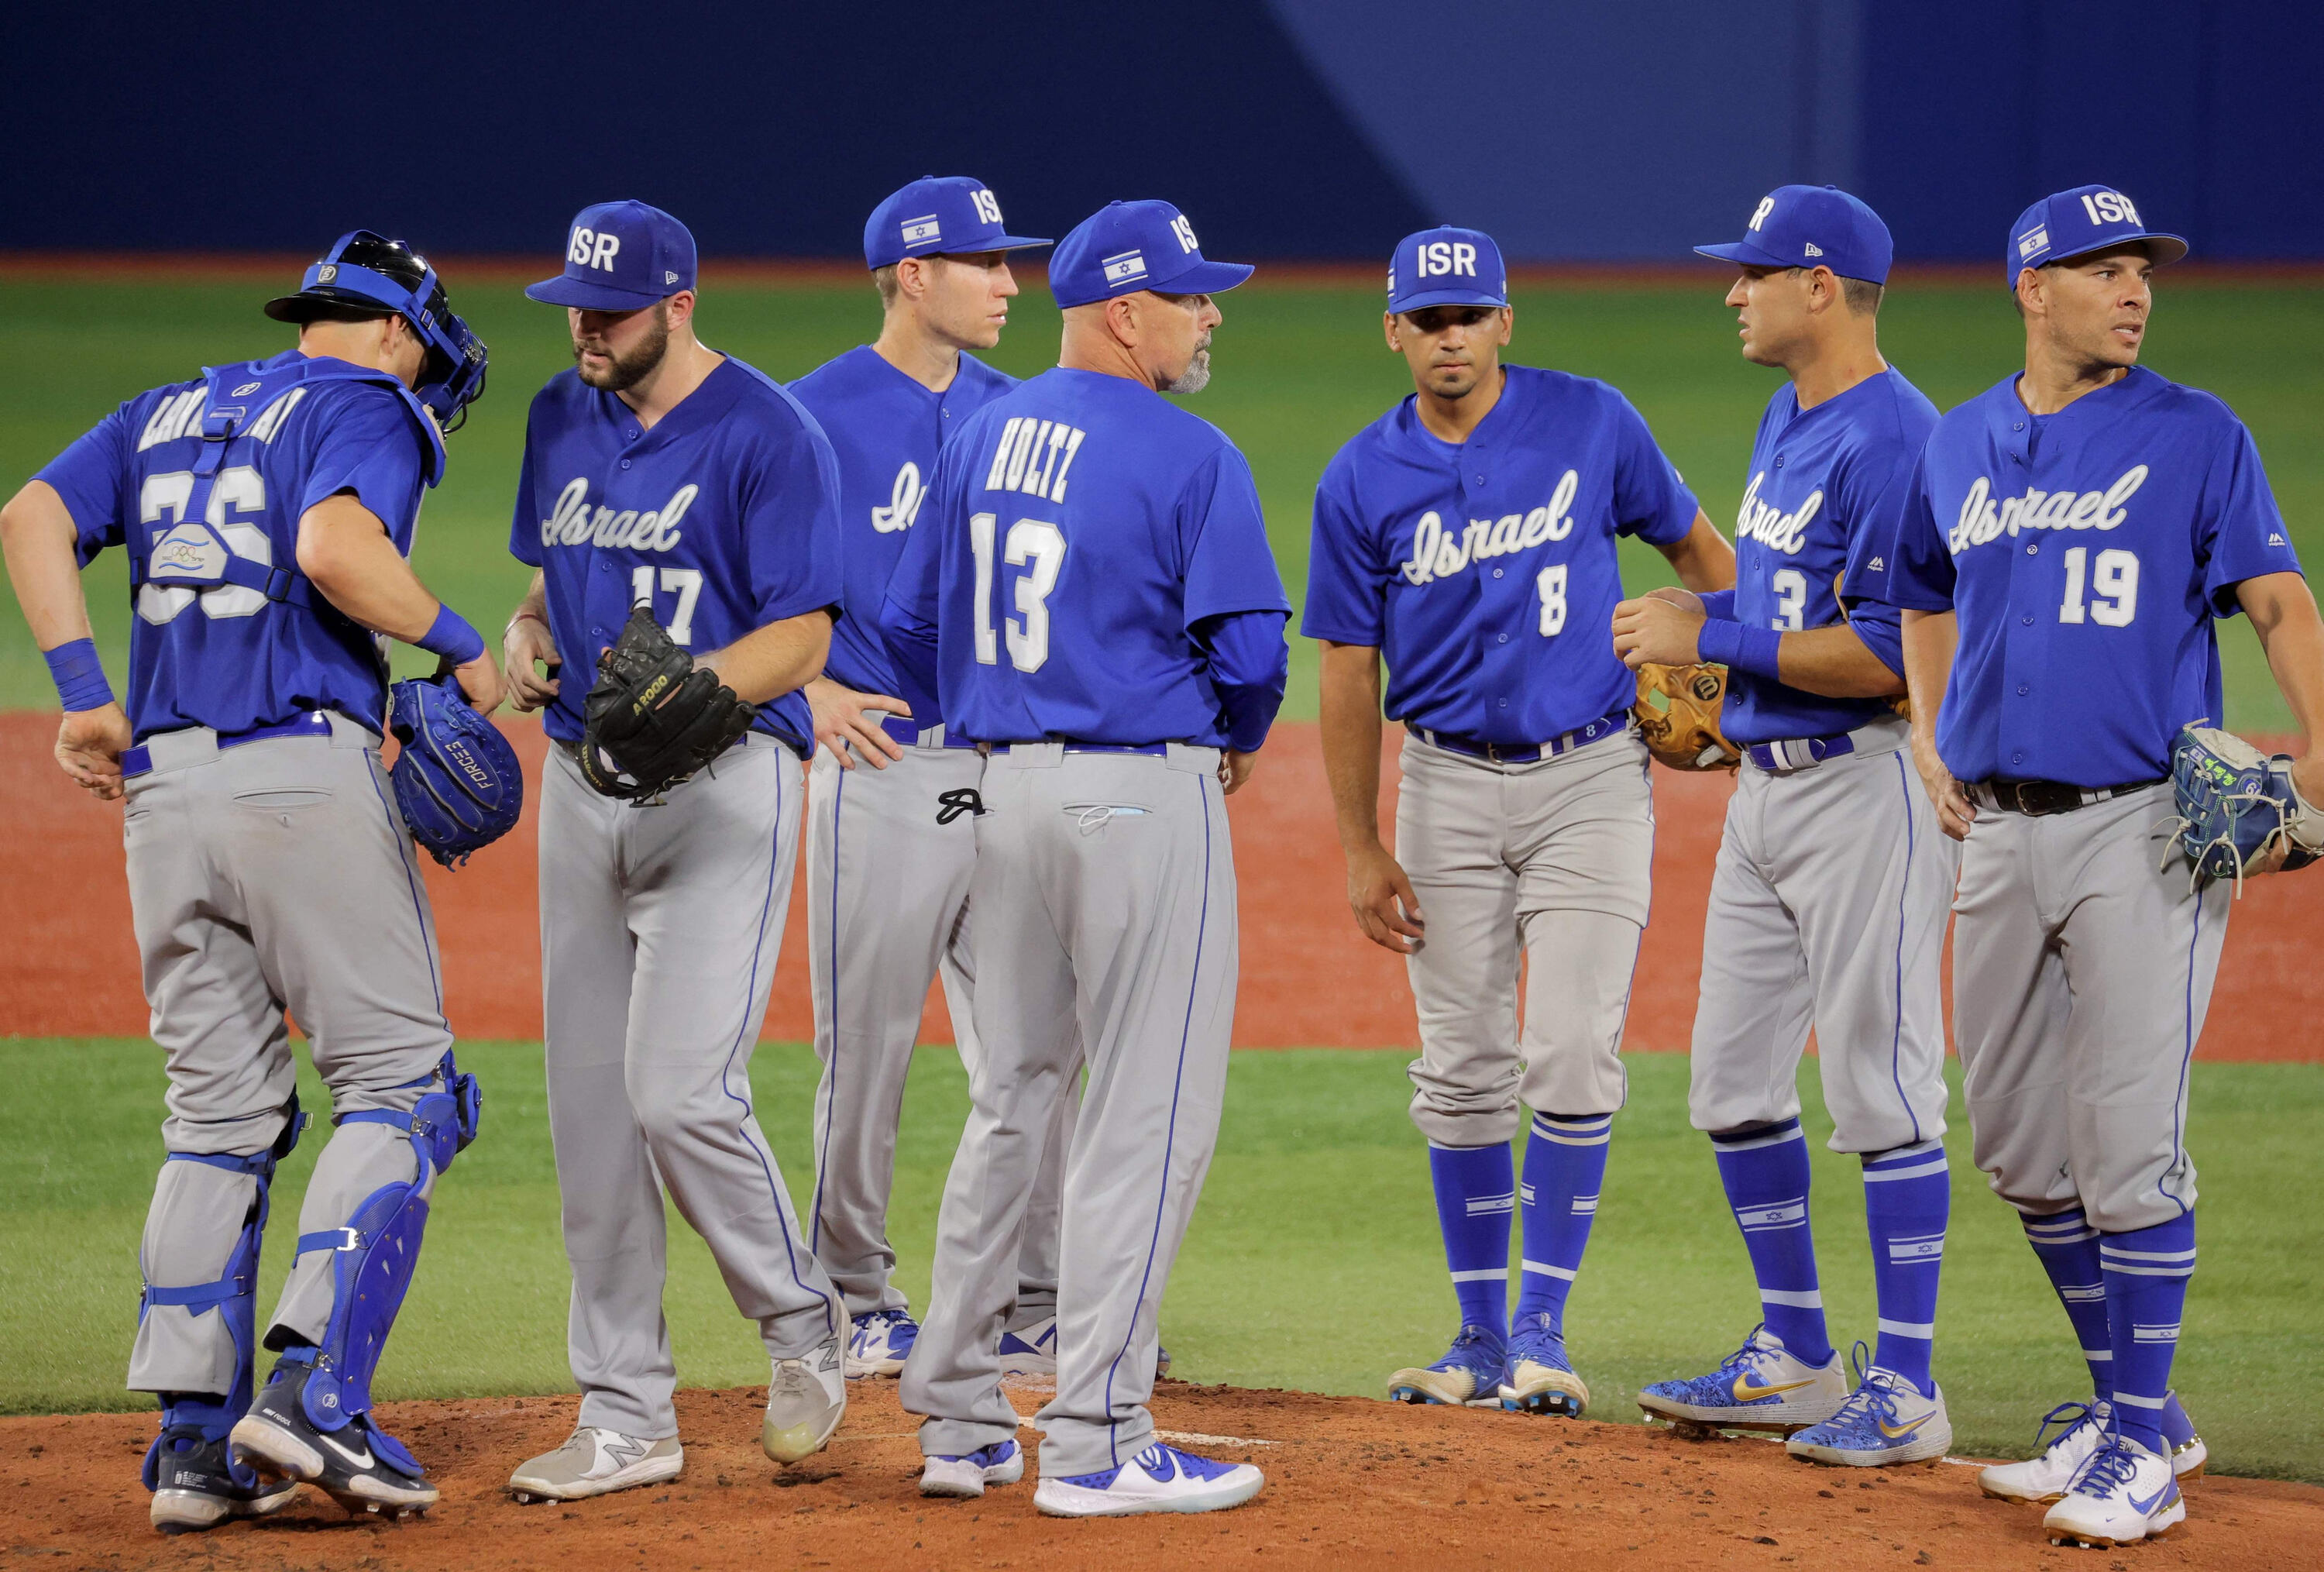 MLB vets immerse in Jewish heritage, build Israel baseball – Reading Eagle